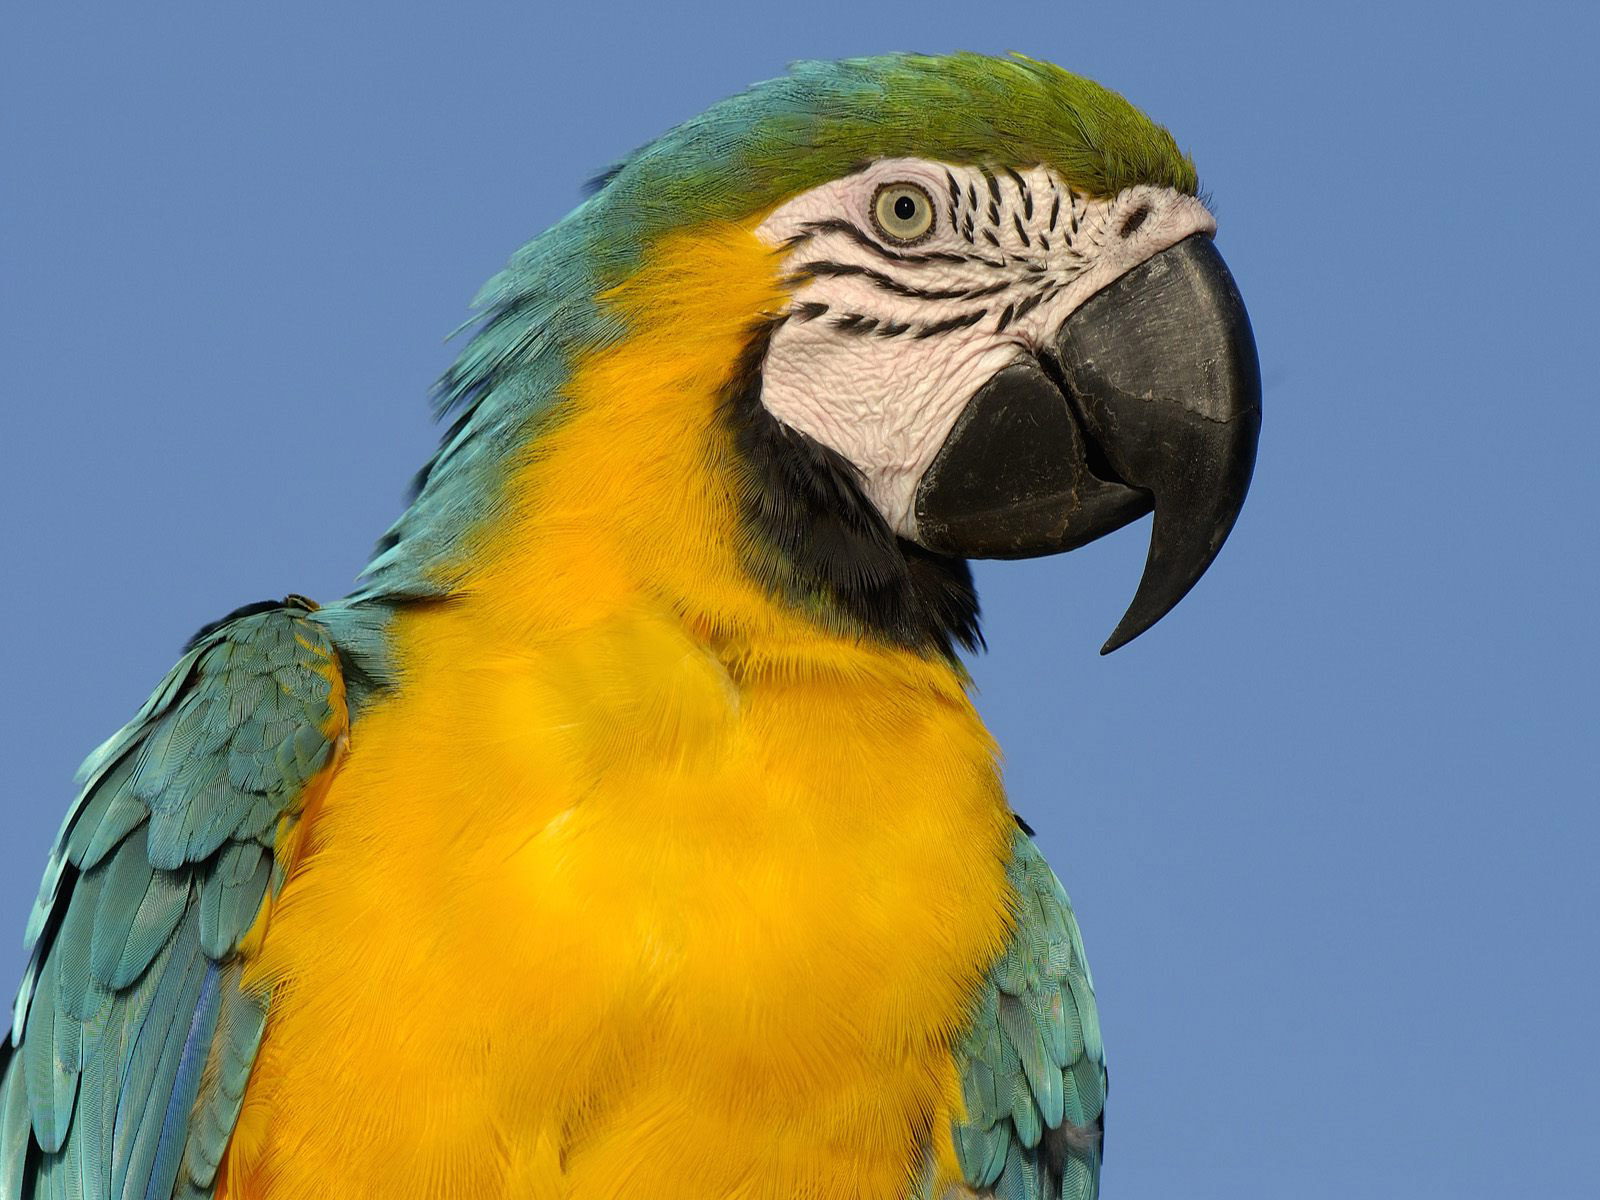 https://blogger.googleusercontent.com/img/b/R29vZ2xl/AVvXsEgejBfDmqMnDK5iSX2Up4xro5ukNYoOeWjtDvvgej2Wh1FrEiKwcdymfA9mTRgW3lYKvokBxrMeZwq4OxzWYFtcVuD0GCcxknpIoKPNaoitBpAllwiGjzuVgFedyvu03uN-uYYUiaNHGhI/s1600/Best-top-desktop-birds-wallpapers-hd-bird-wallpaper-picture-image-psupero-25.jpg